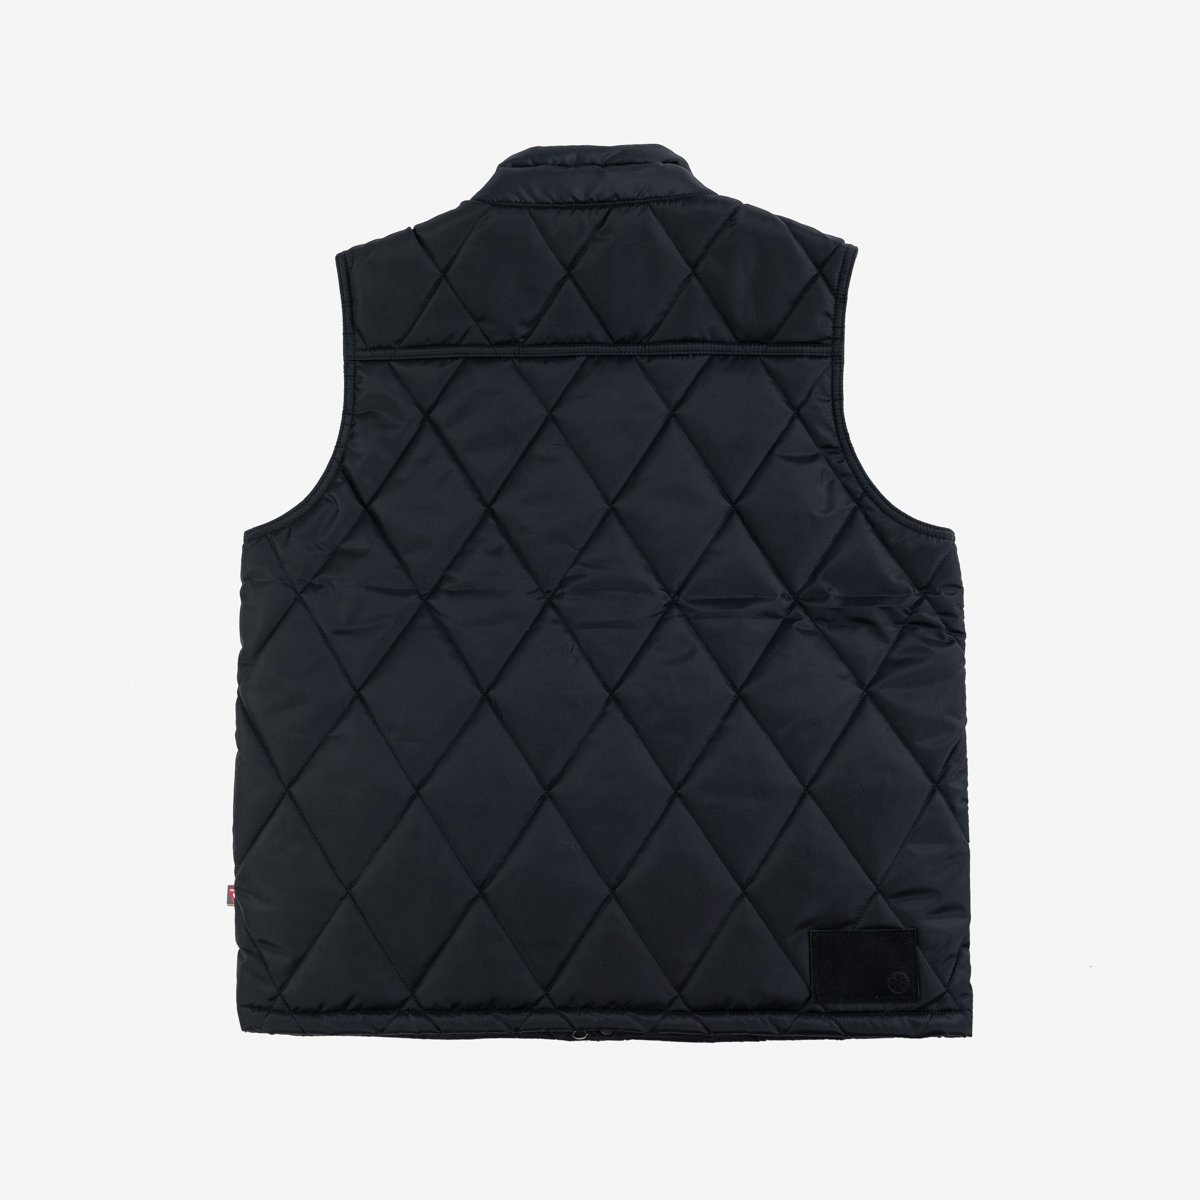 Black Diamond Quilted Vest